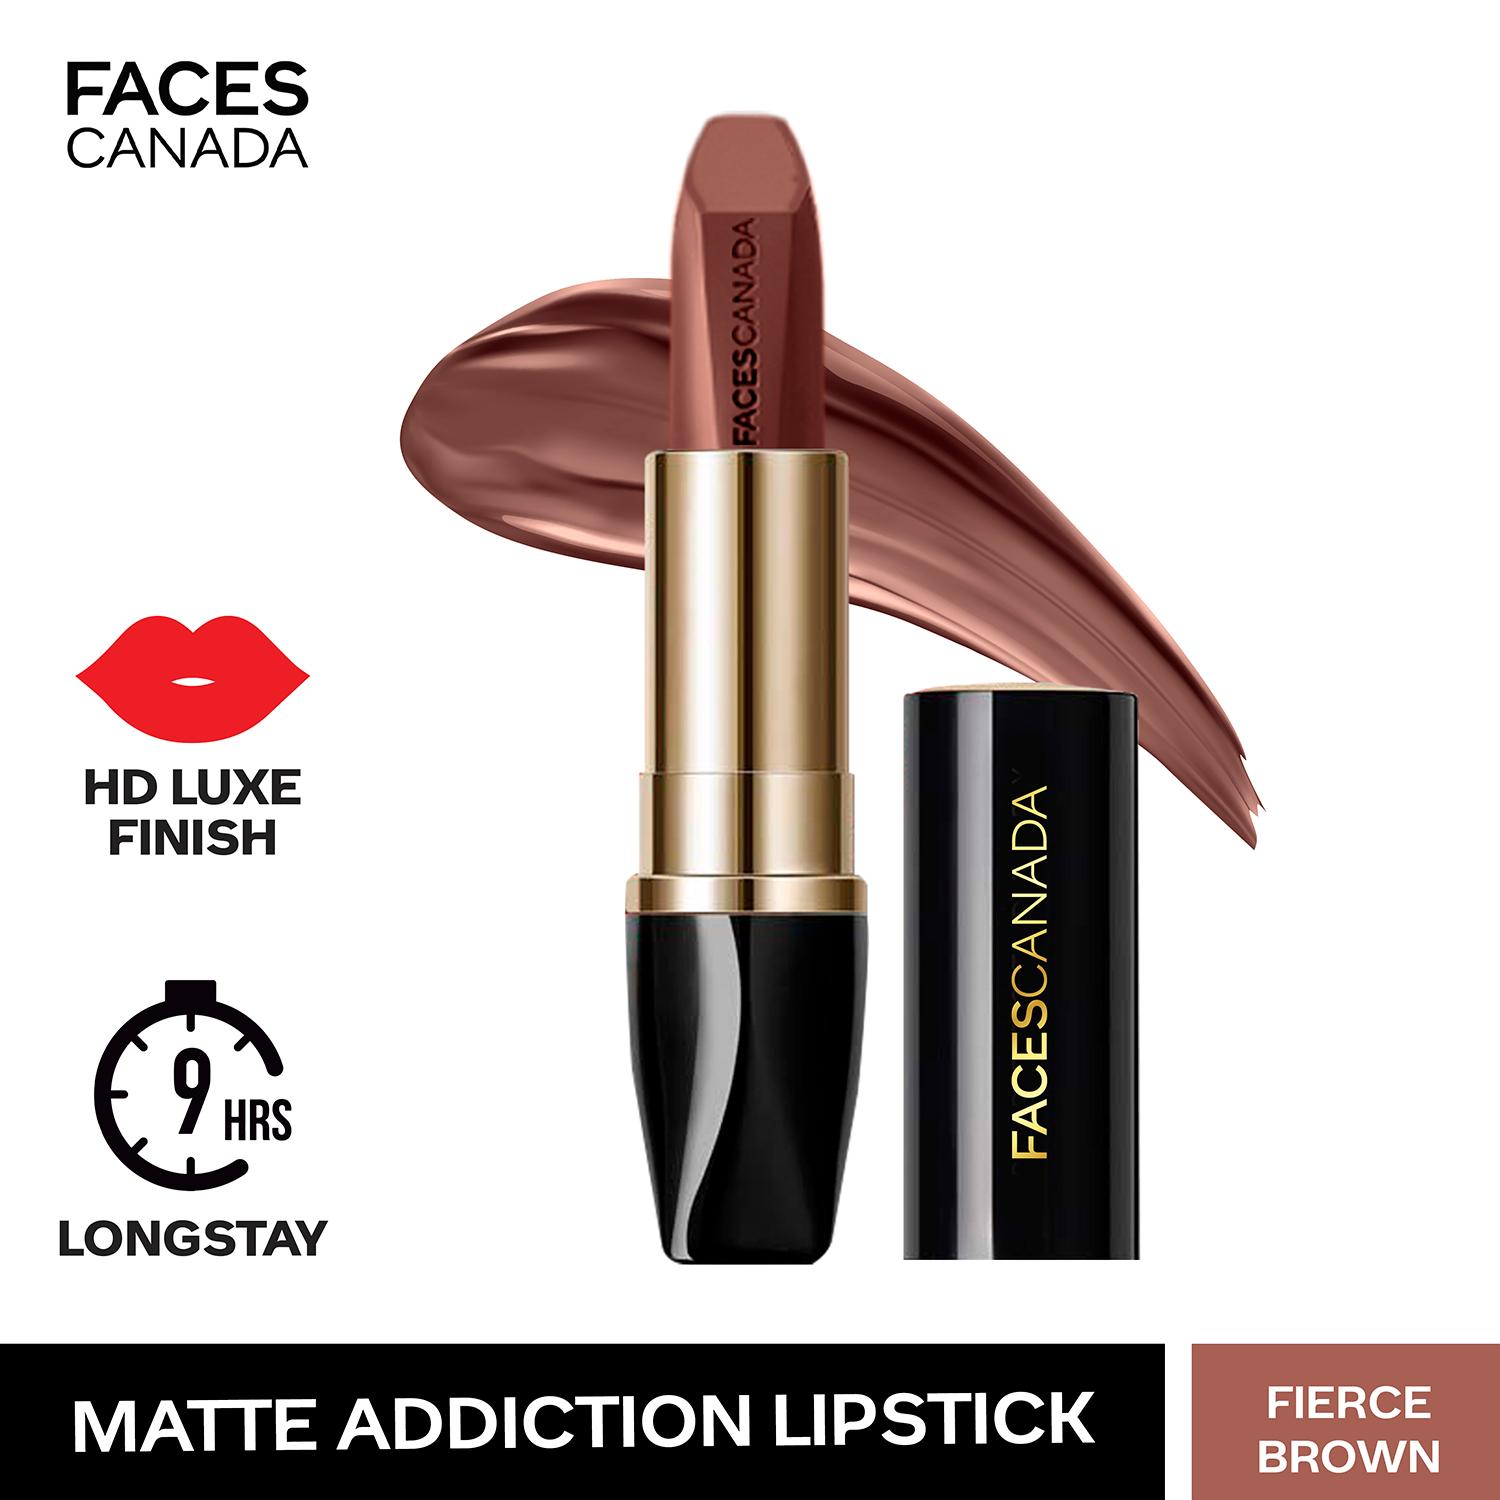 Faces Canada | Faces Canada Matte Addiction Lipstick, 9HR Stay, HD Finish, Intense Color - Fierce Brown (3.7 g)